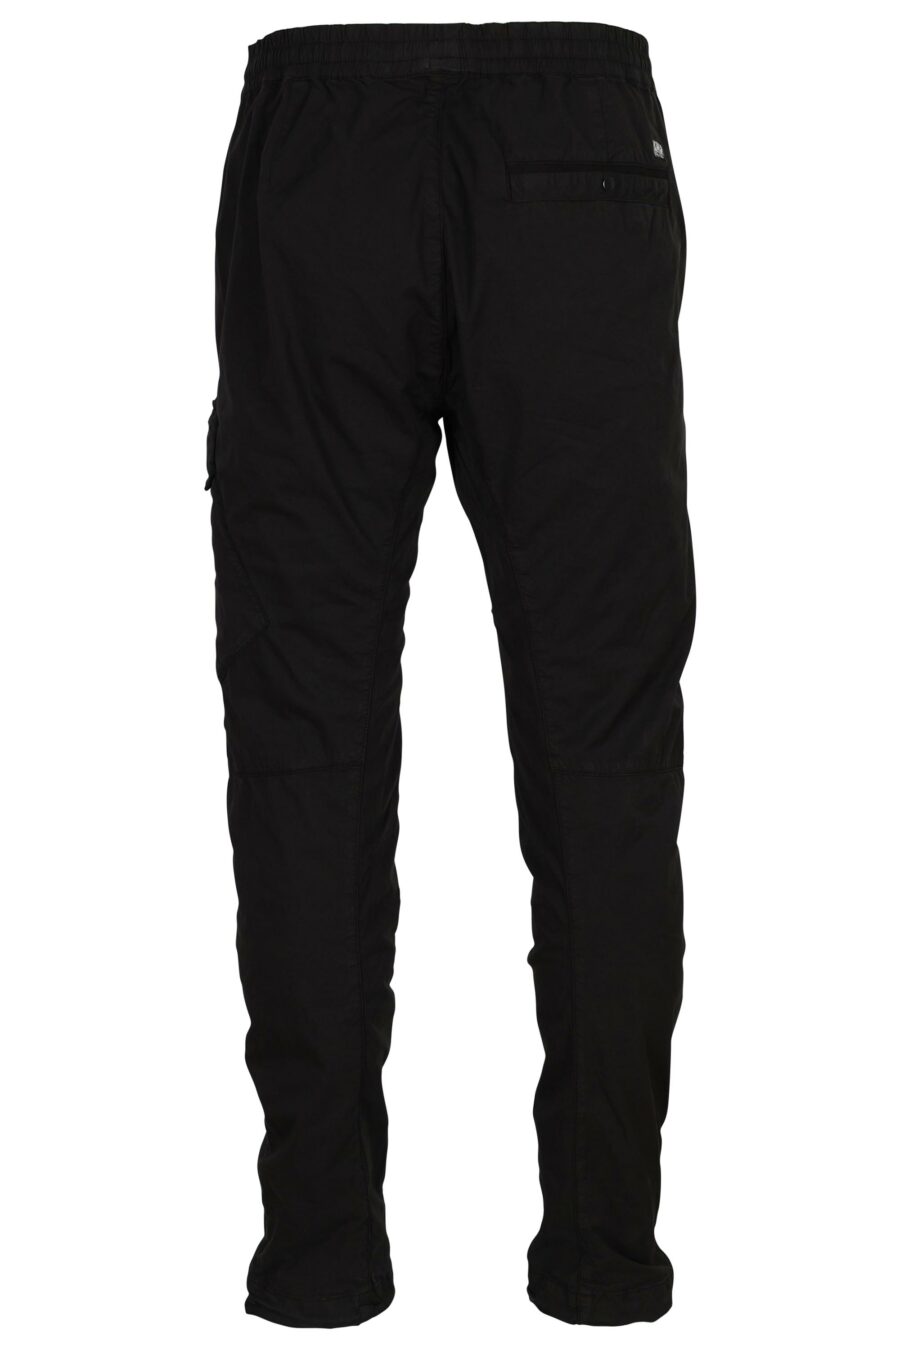 Pantalon cargo noir avec mini-logo en forme d'objectif - 7620943805123 2